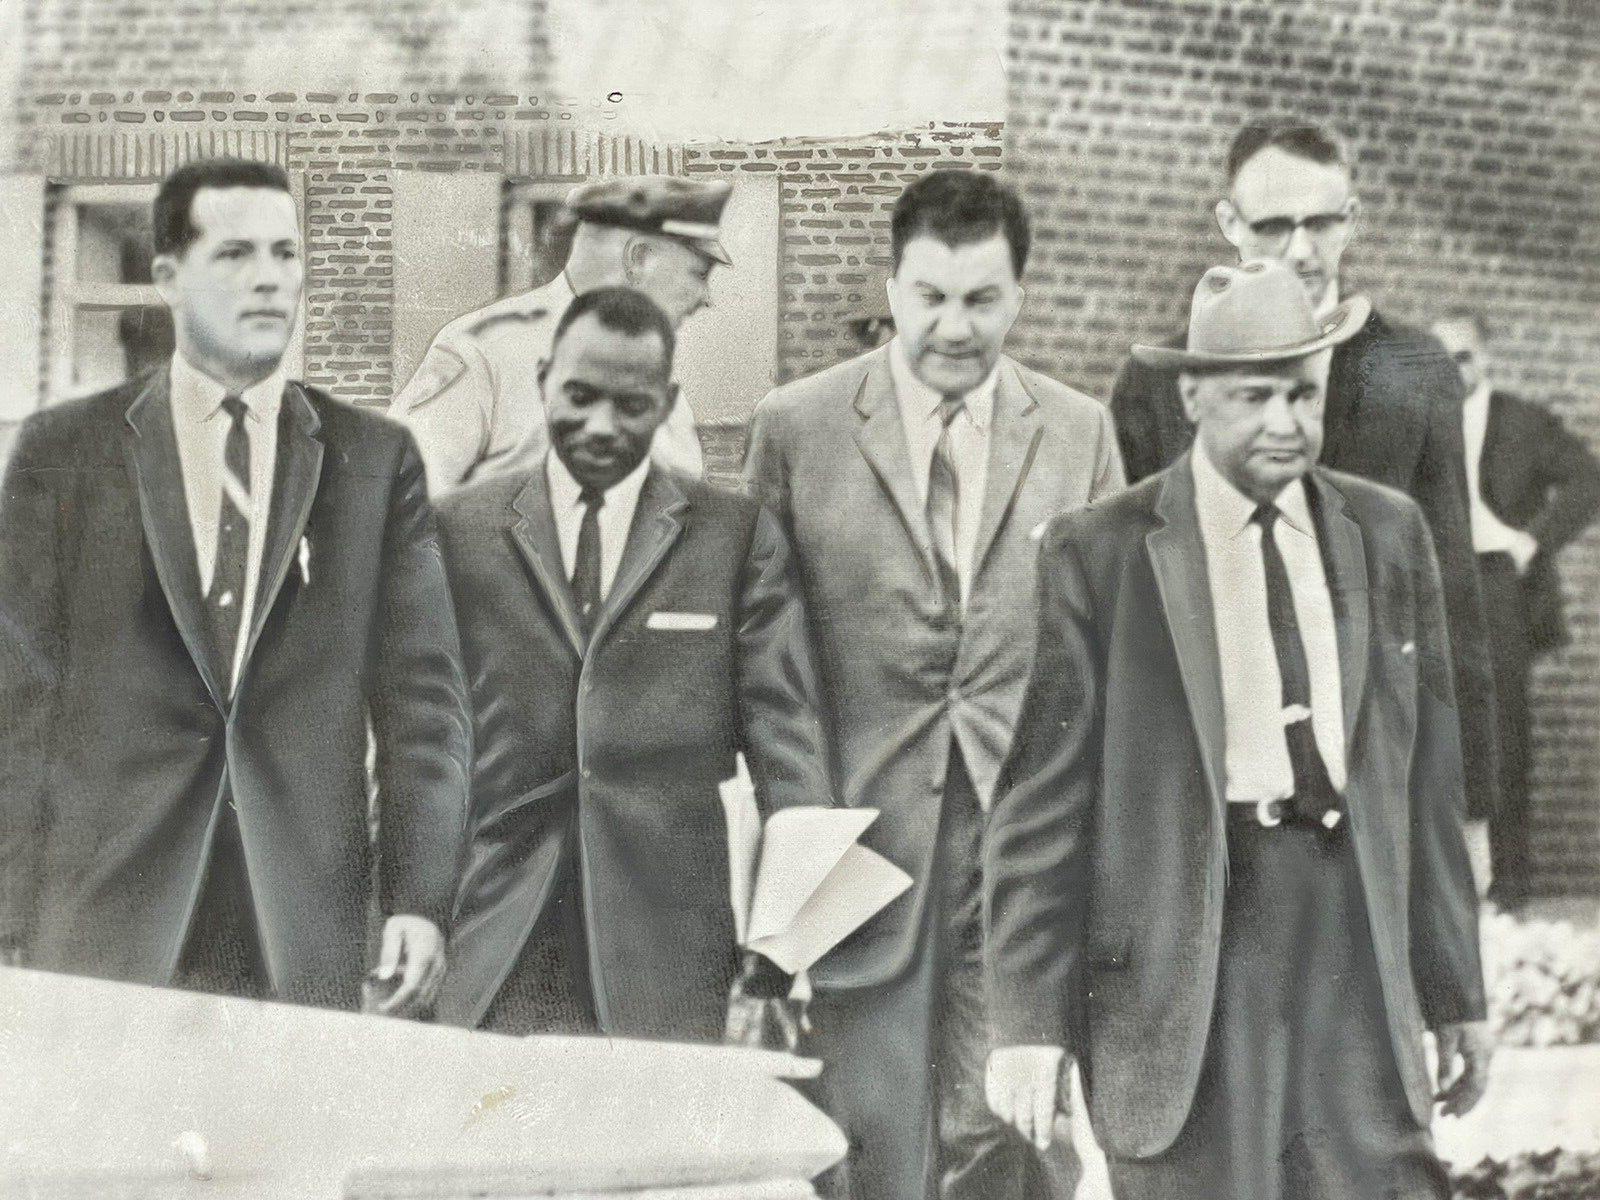 James Meredith Civil Rights Press Photograph 1962 #historyinpieces